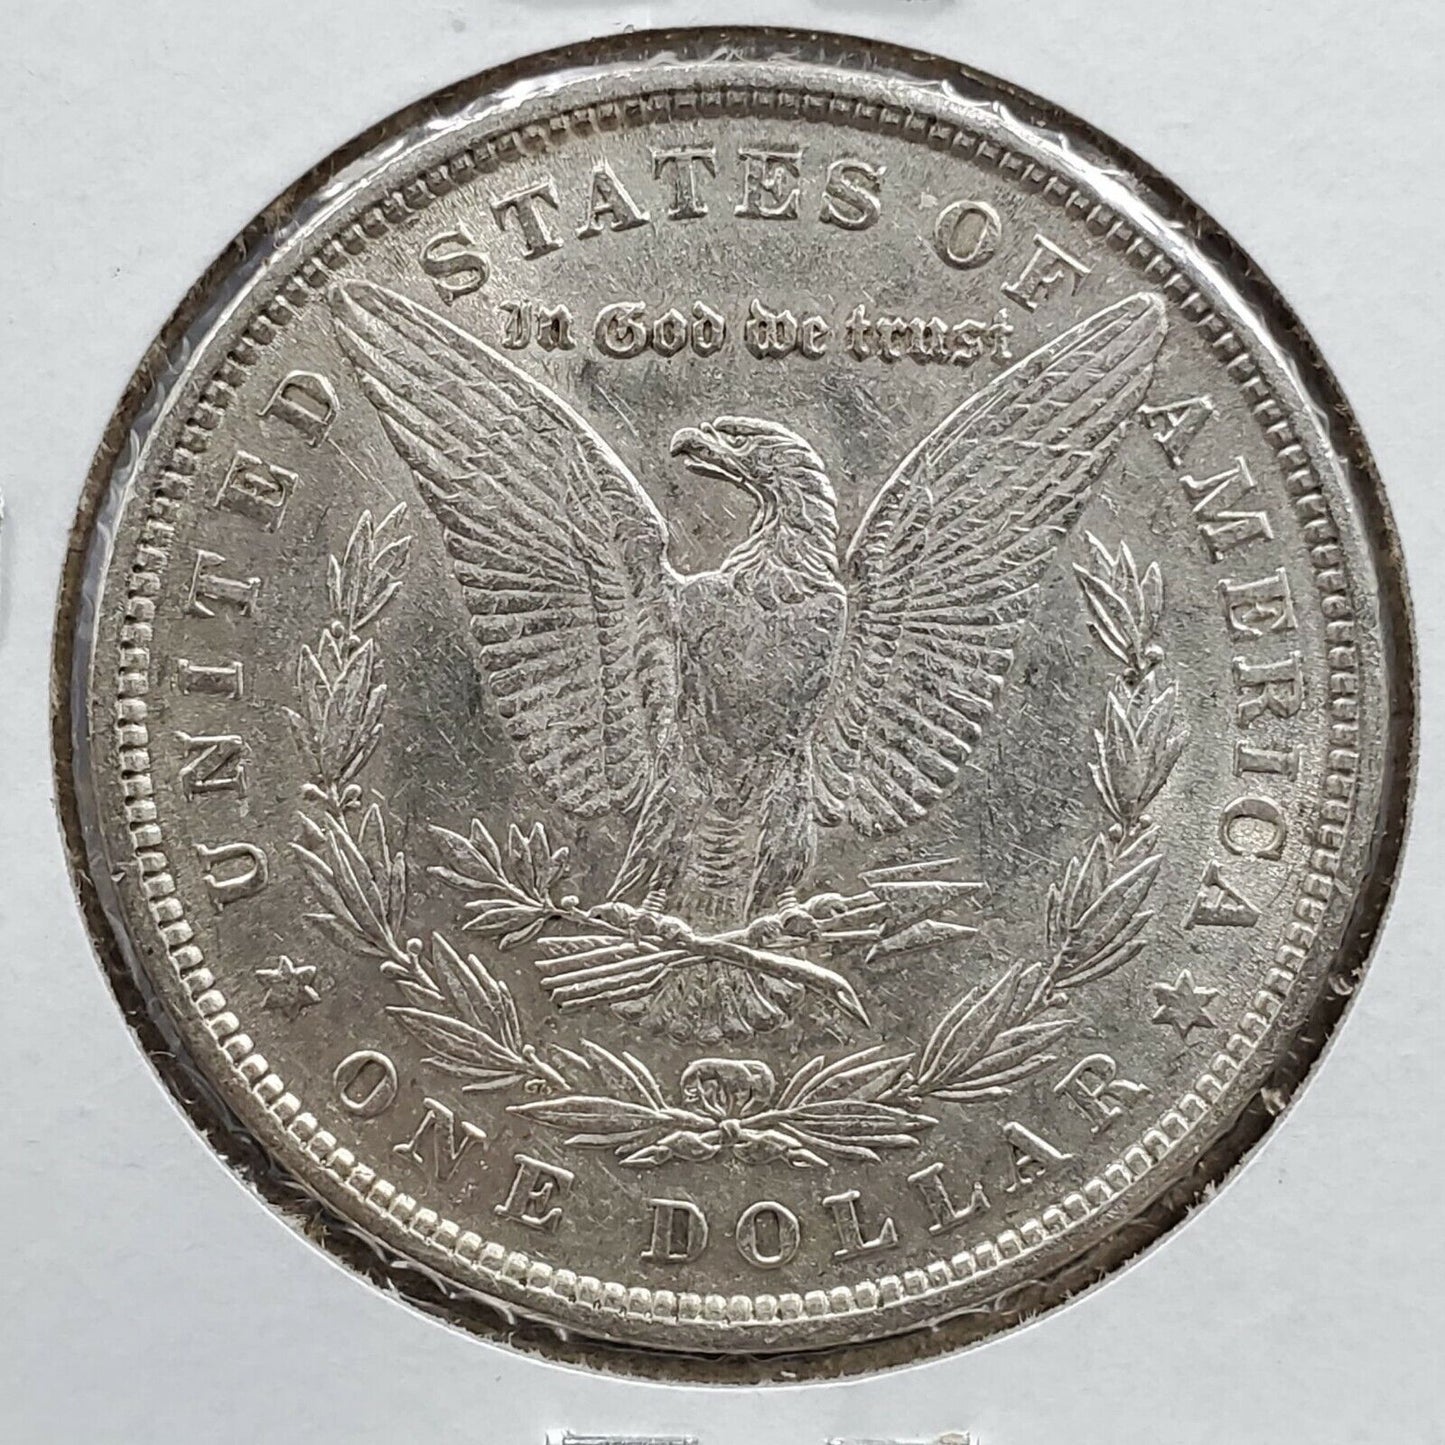 1880 P Morgan Silver Eagle Dollar Coin XF / AU Details VAM 6 8/7 Spikes Variety